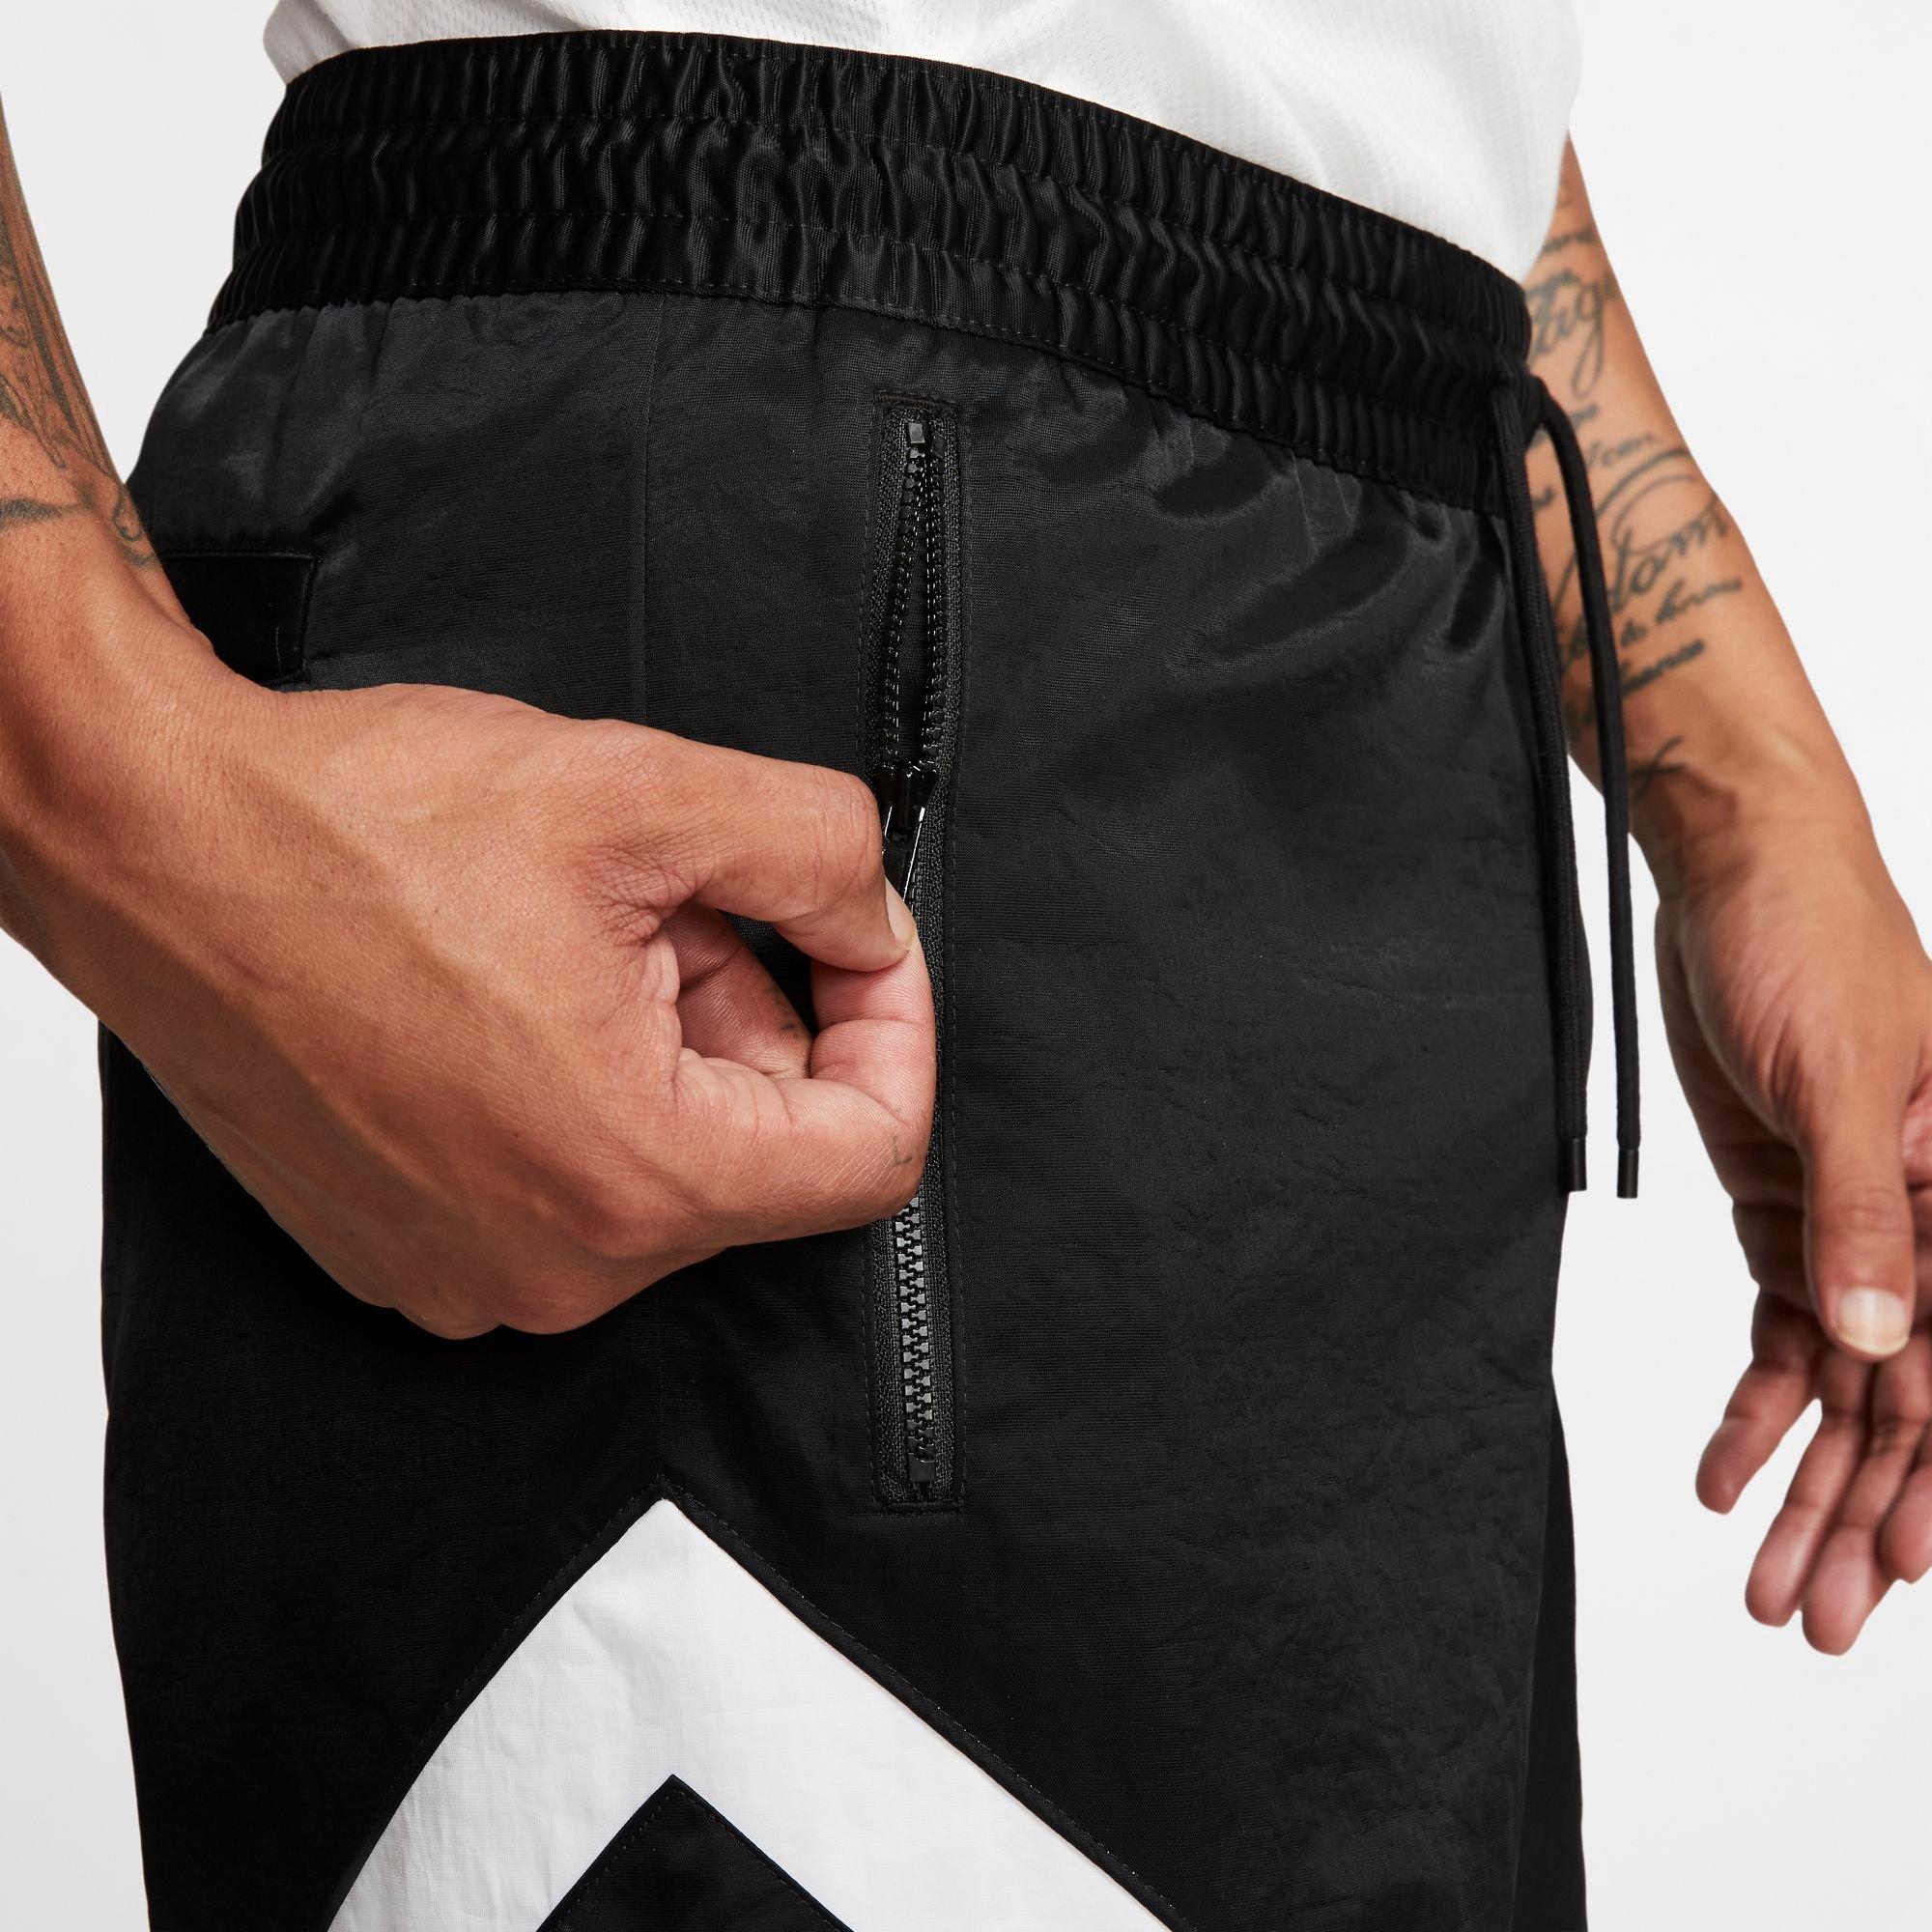 jordan shorts with zipper pockets buy 